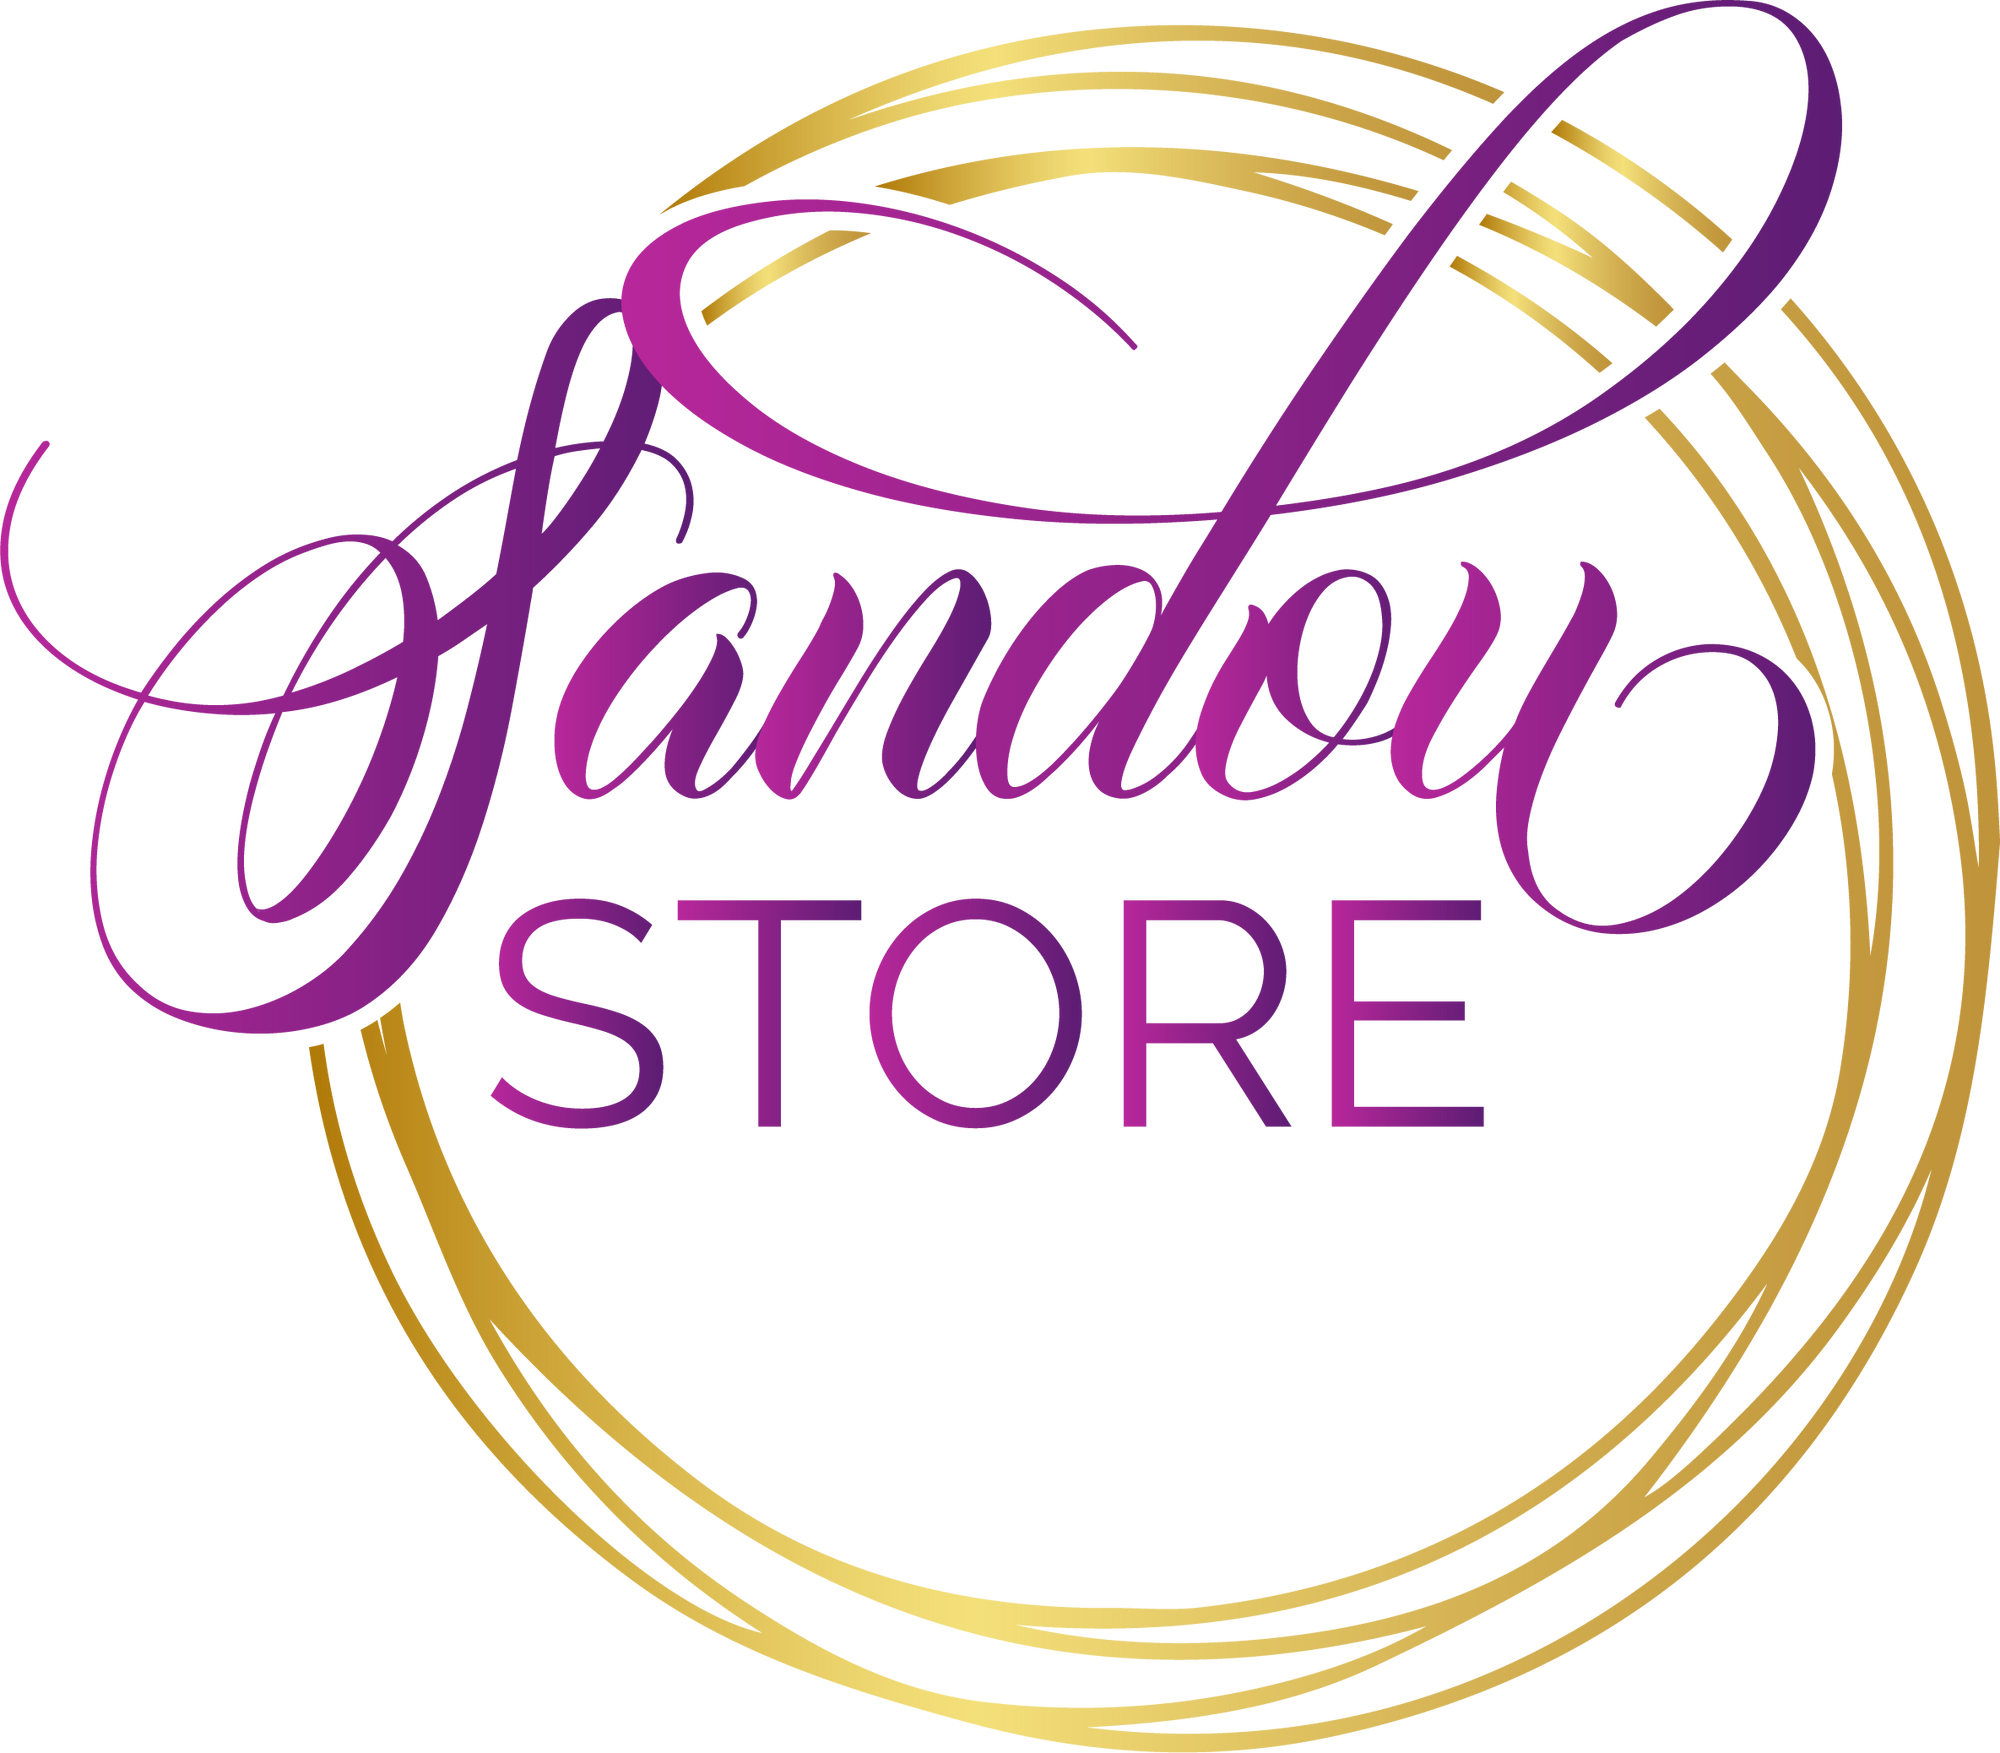 sandou store logo